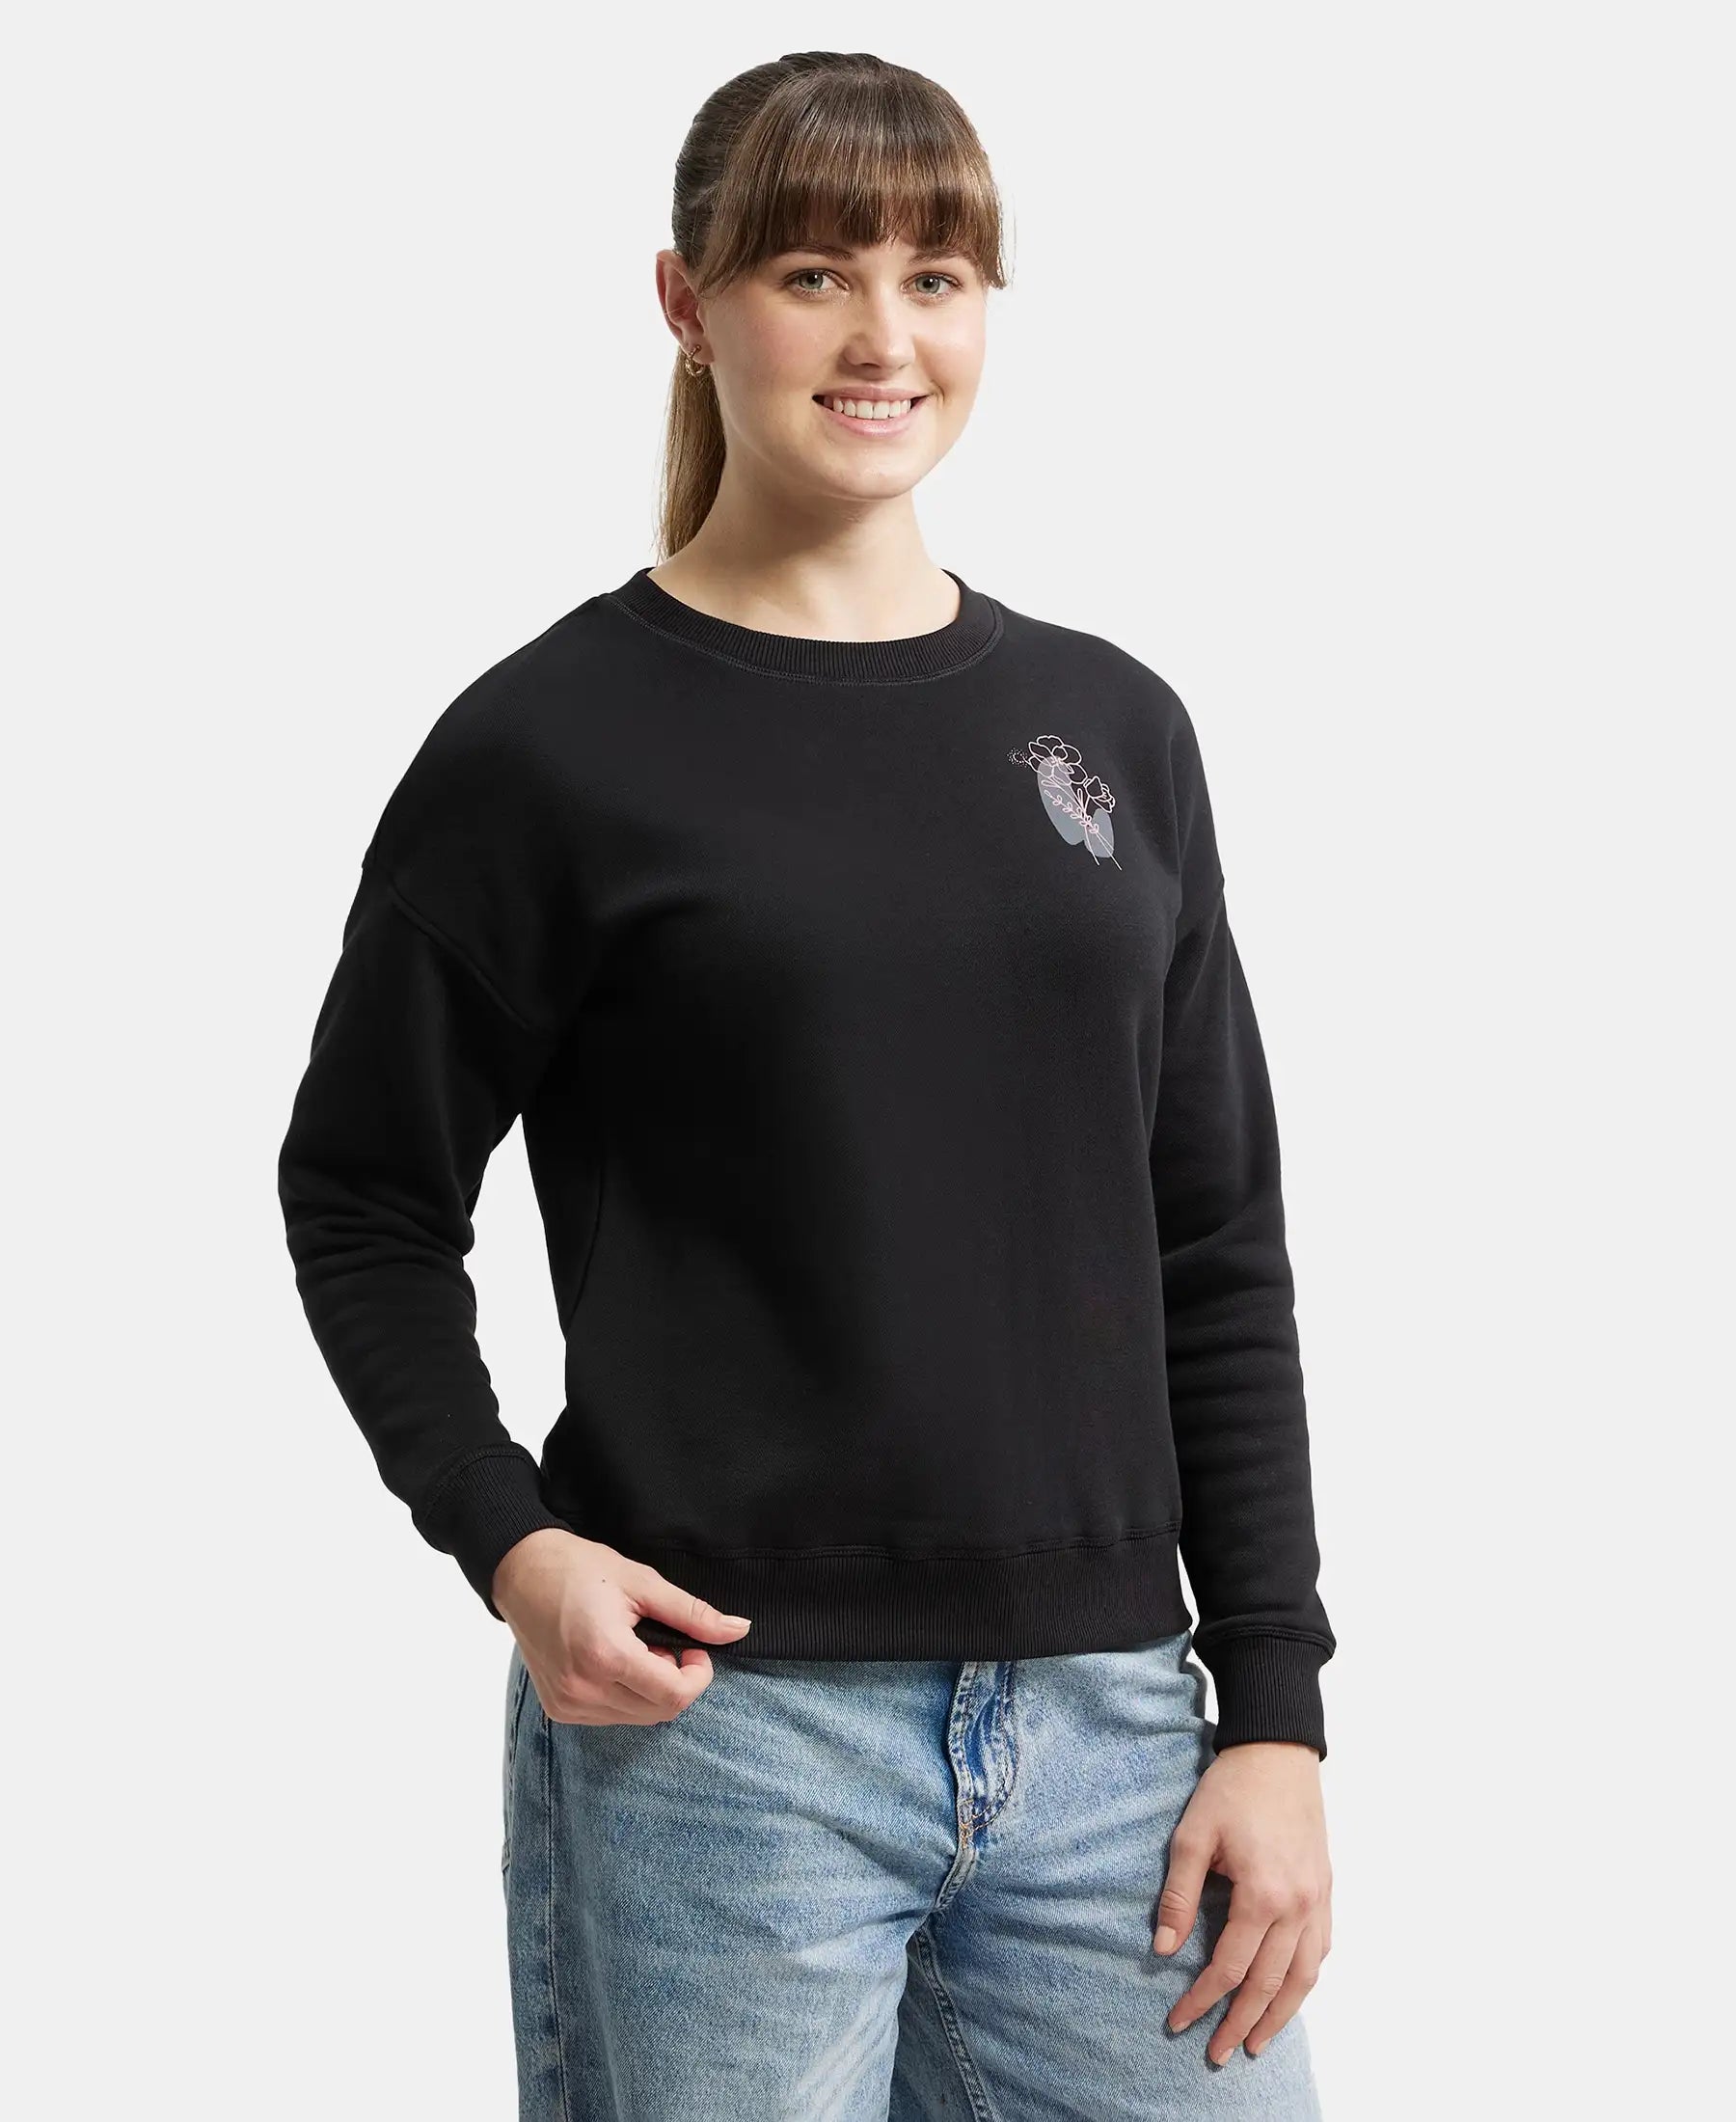 JOCKEY Womens Gray 1/4 Zip Soft Knit Pullover Long Sleeve Sweater